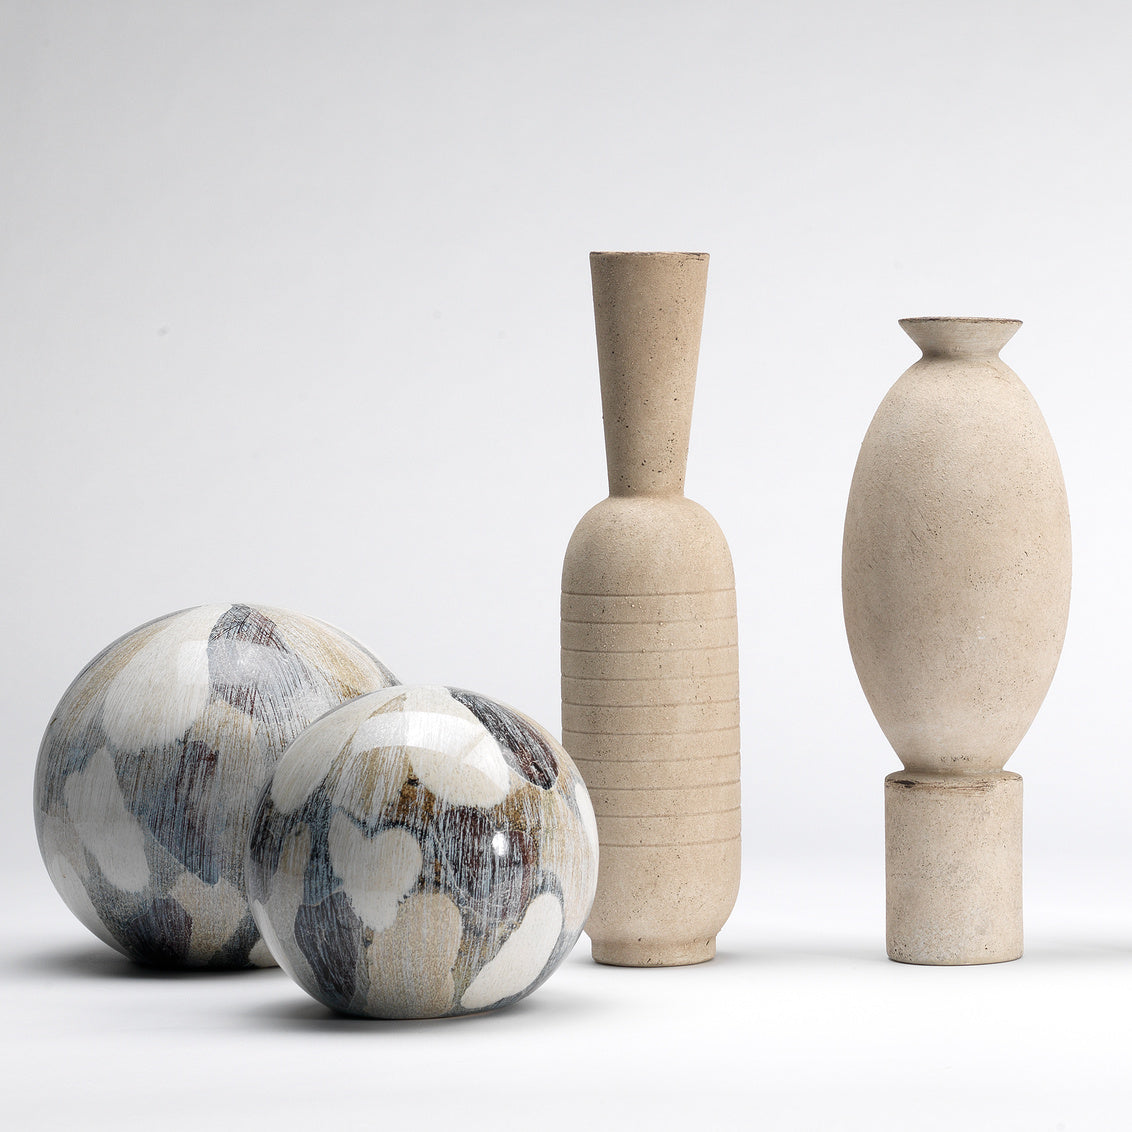 Channel Decorative Vase